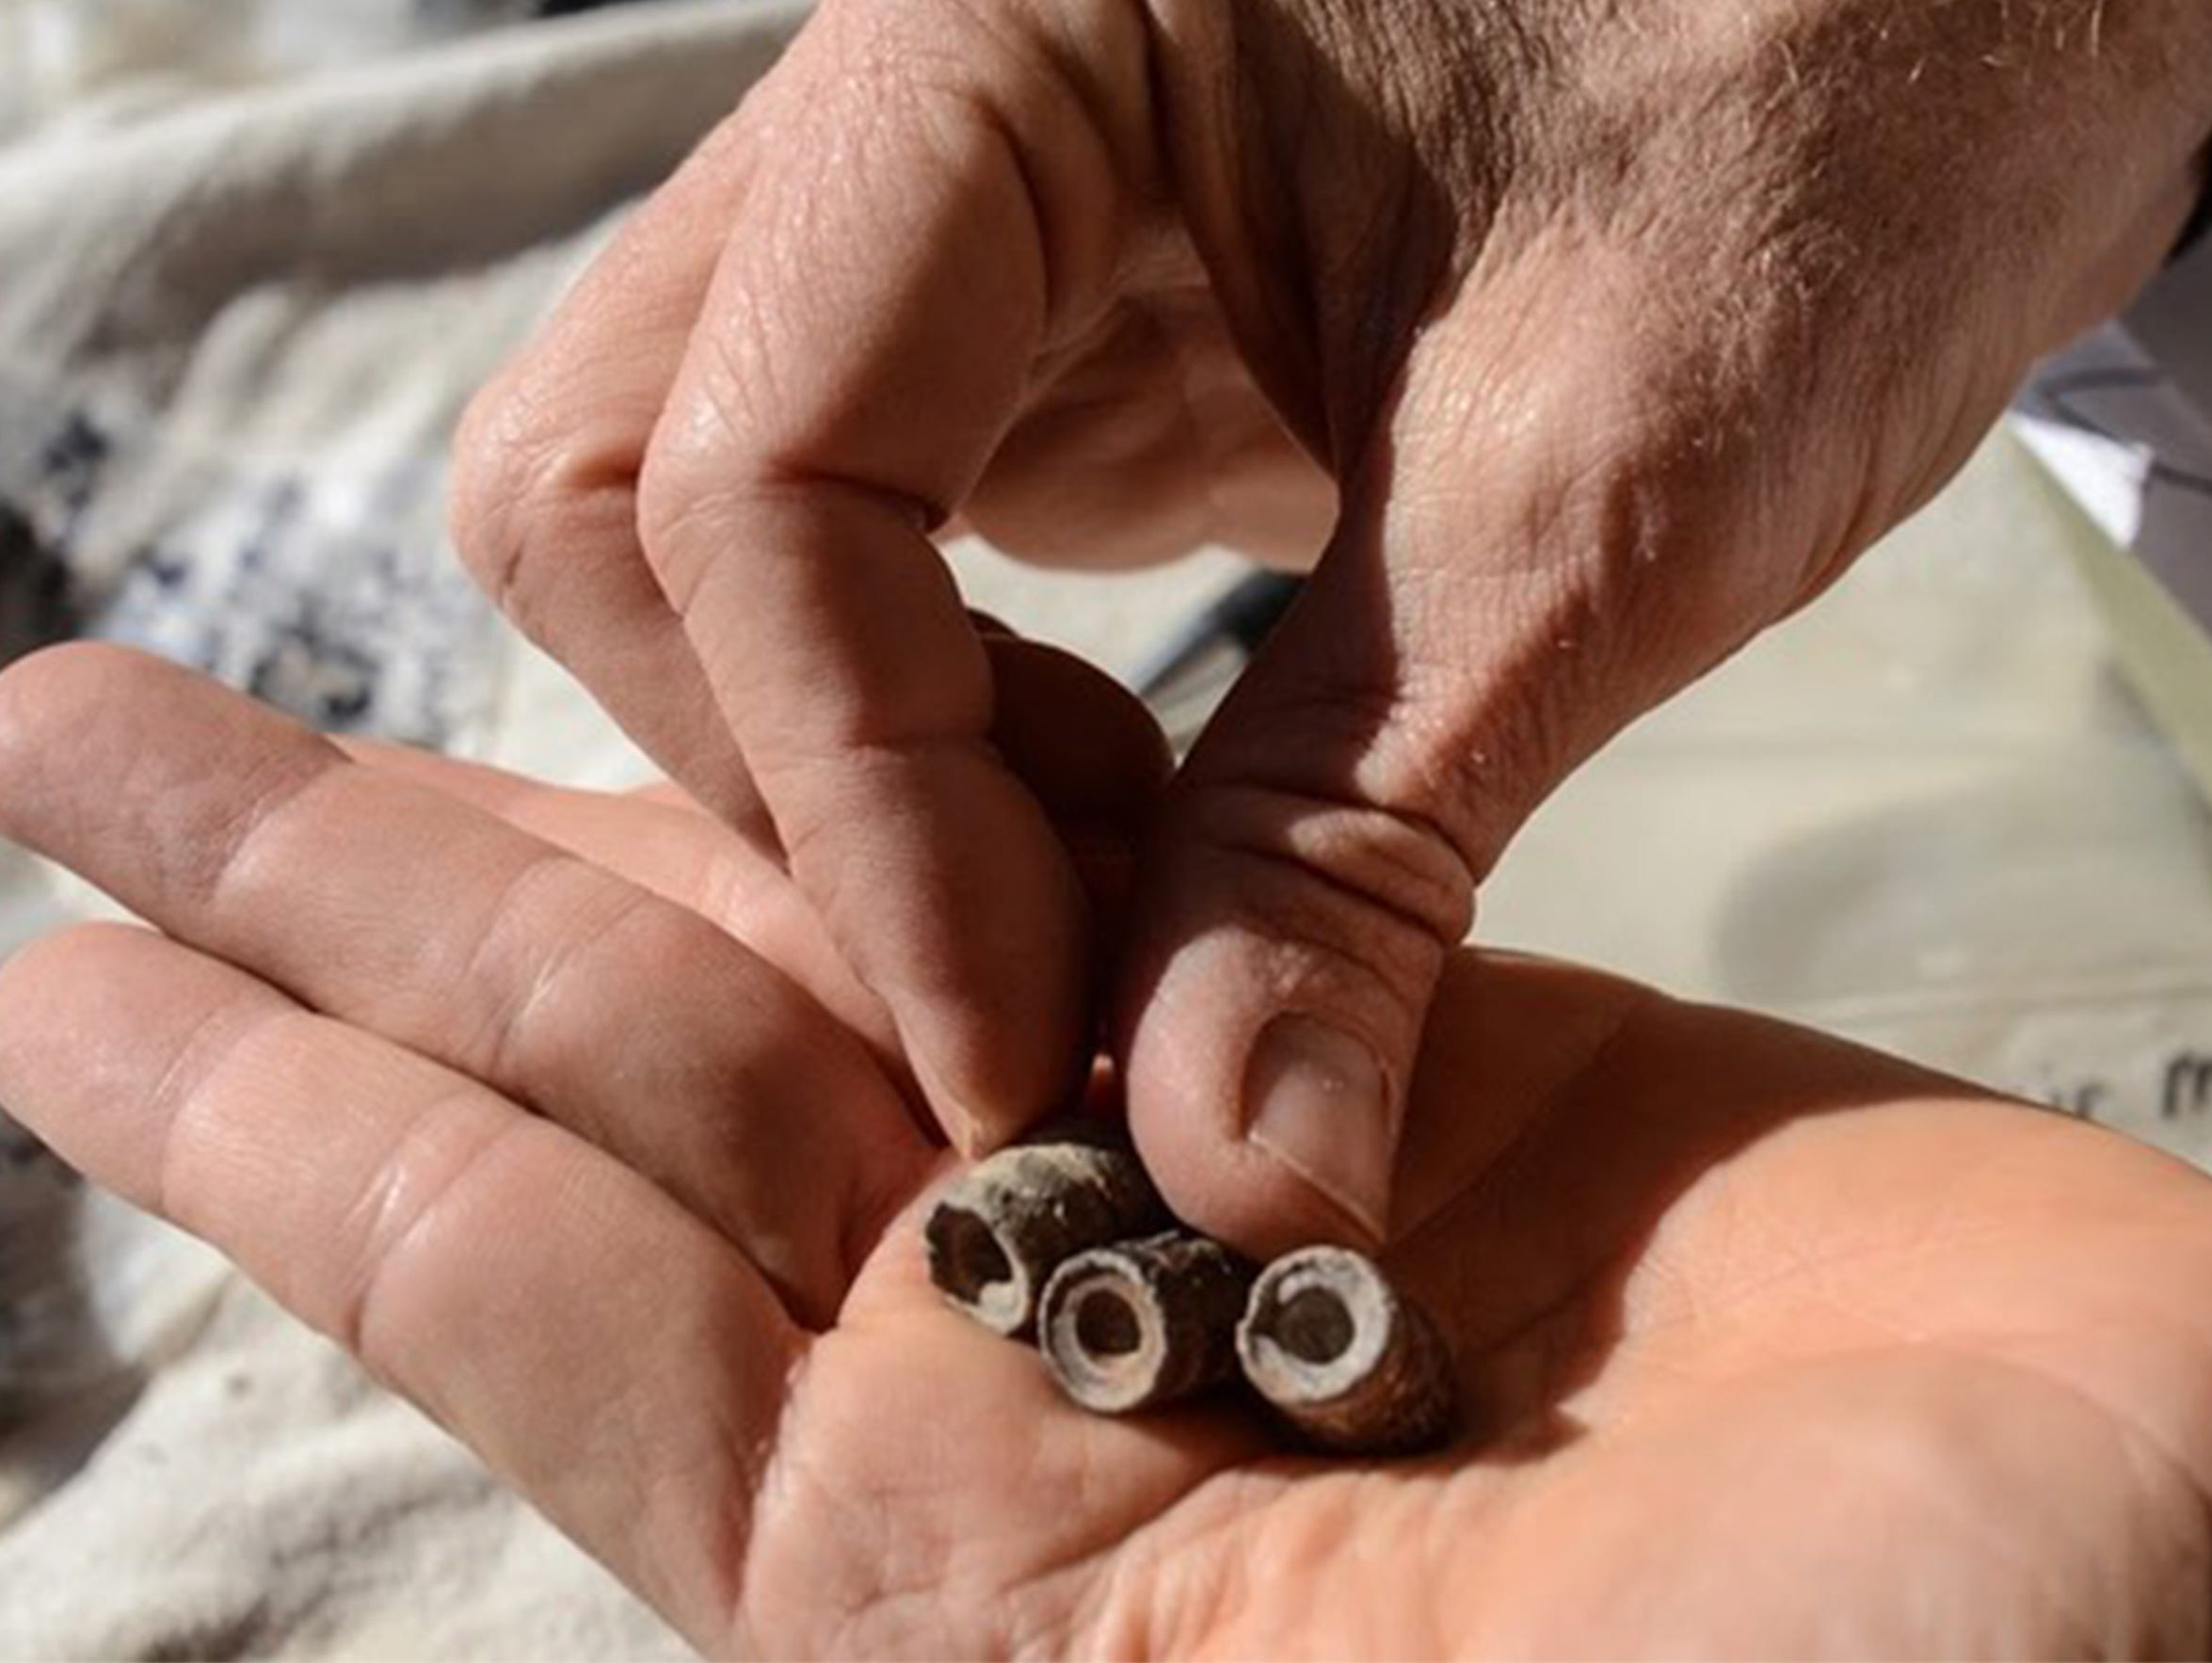 David Keller displays bullets that were excavated from the Porvenir massacre site in Texas.